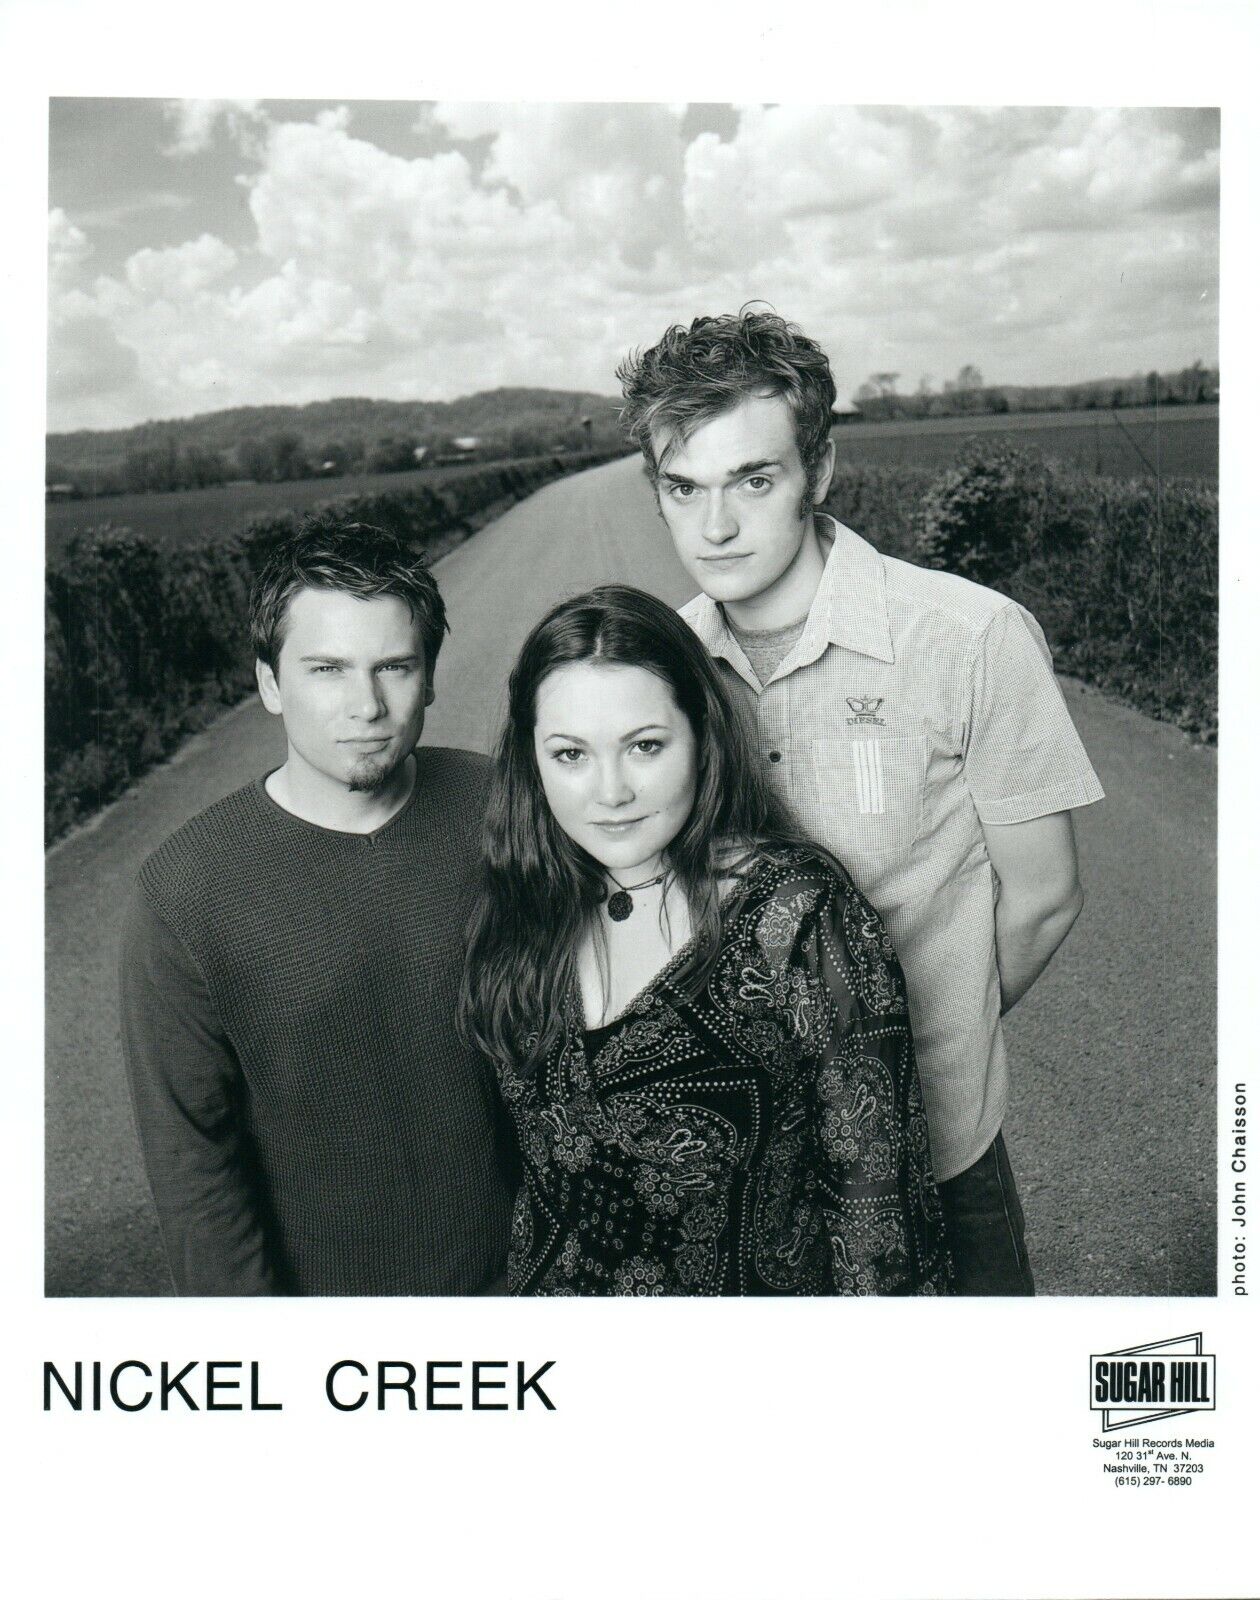 NICKEL CREEK Pop Folk Country Music Band 8x10 Promo Press Photo Poster painting Sugar Hill Rec